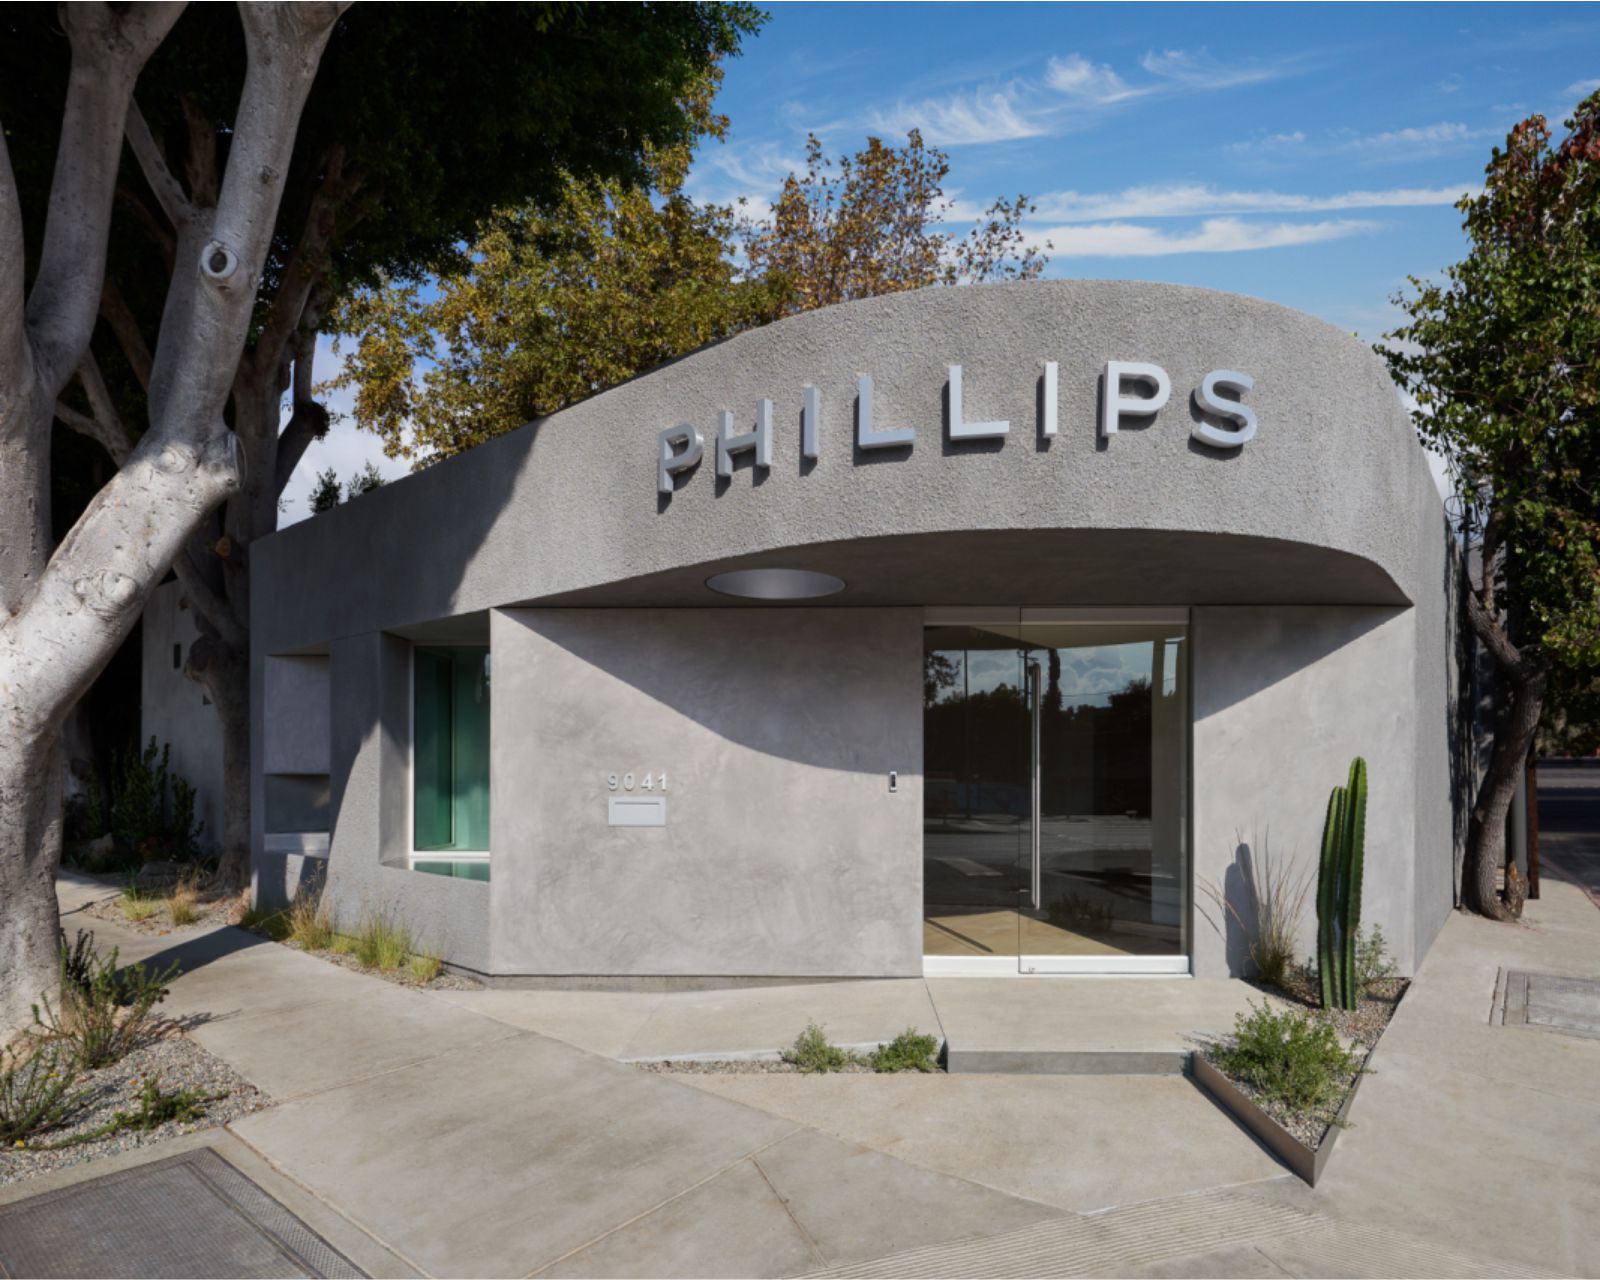 Phillips Auction House